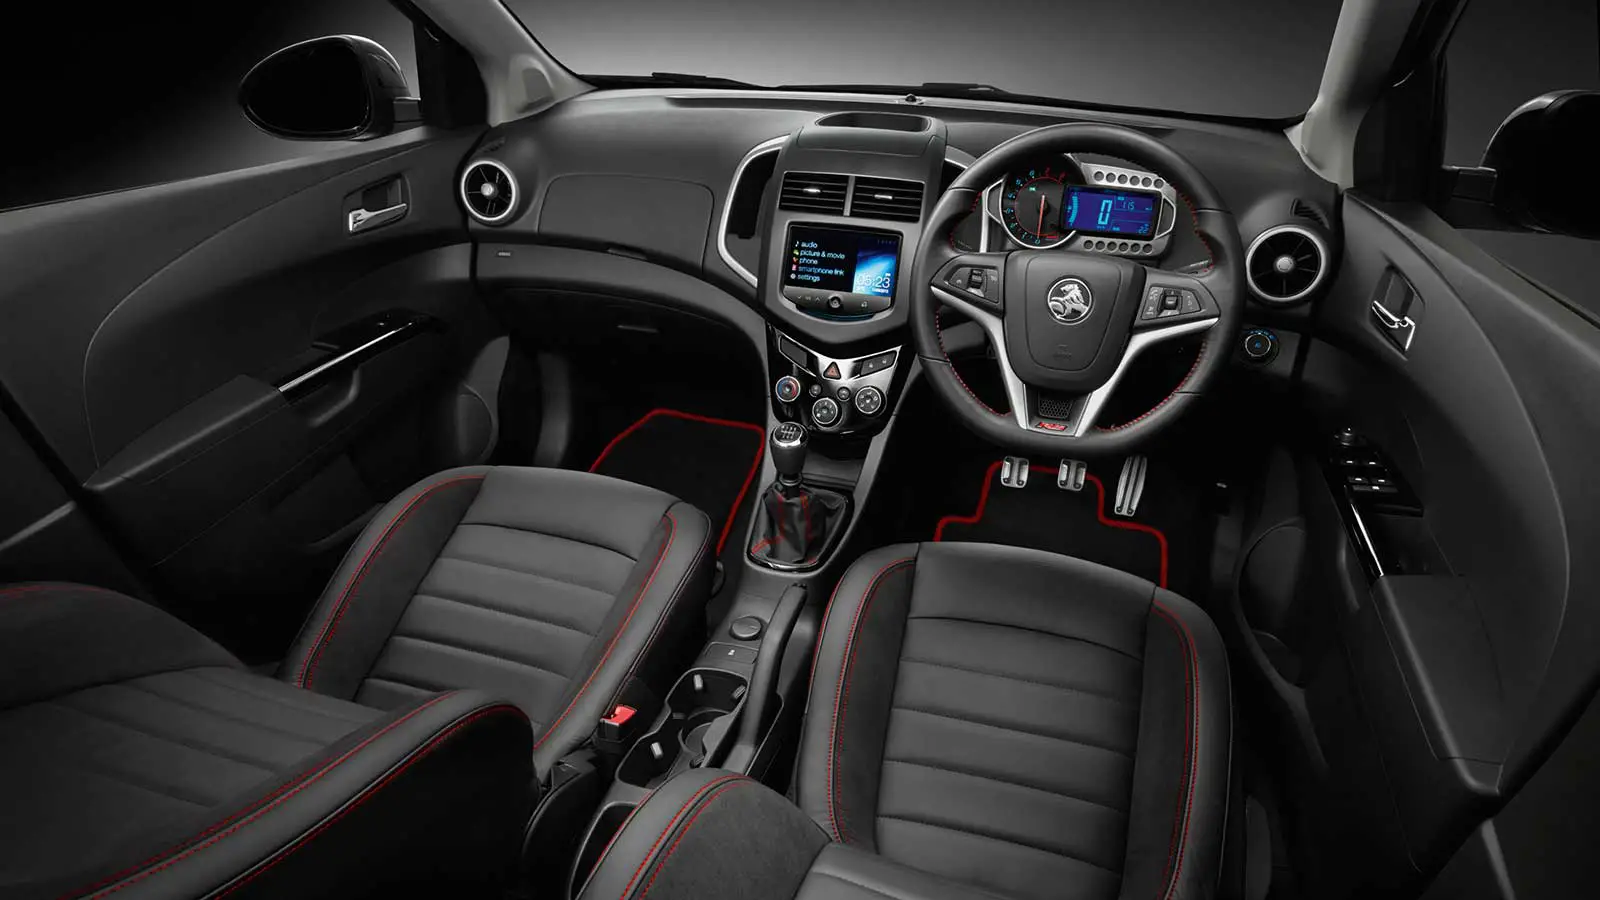 Holden Barina CD Sedan Interior front view